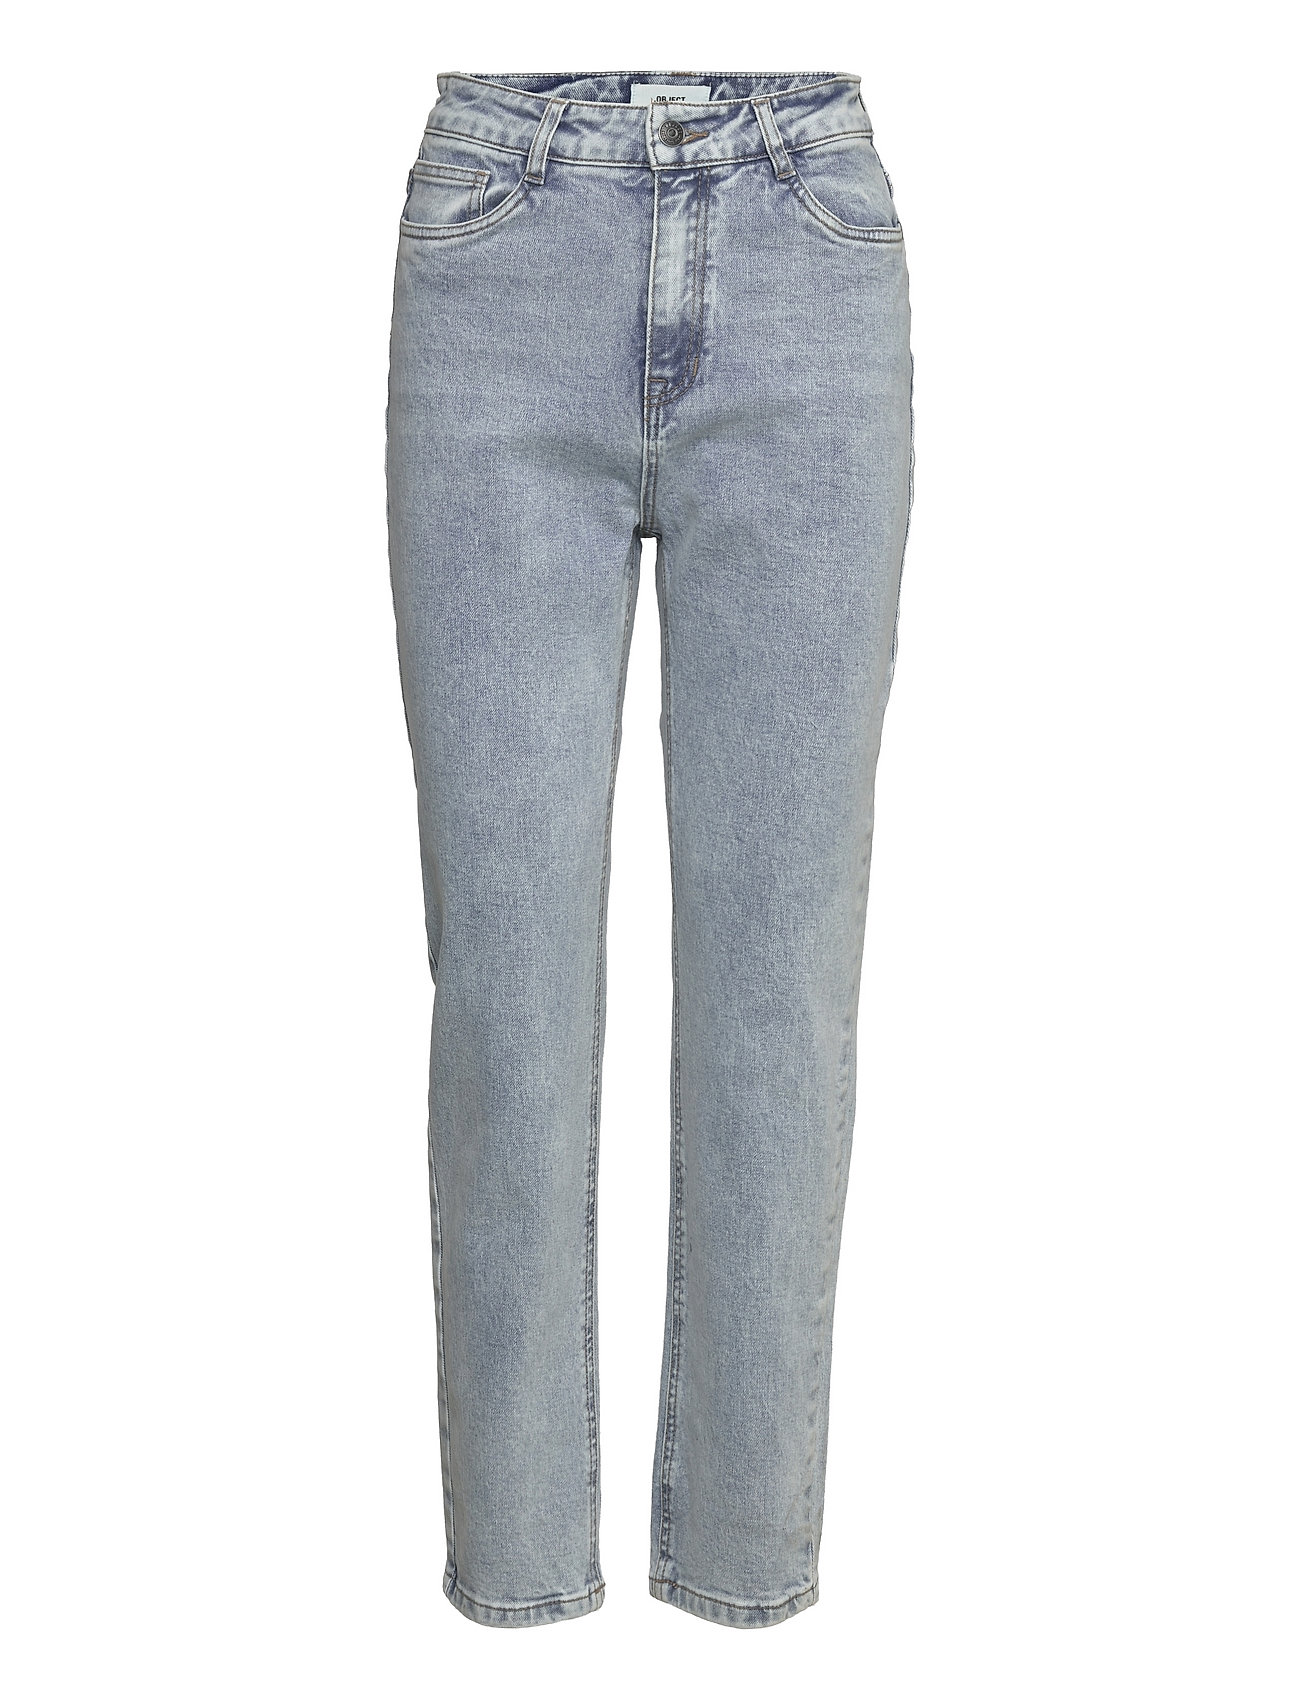 verlamming Evalueerbaar ik zal sterk zijn Object Objalora Hw Denim Jeans Rep - Straight jeans - Boozt.com